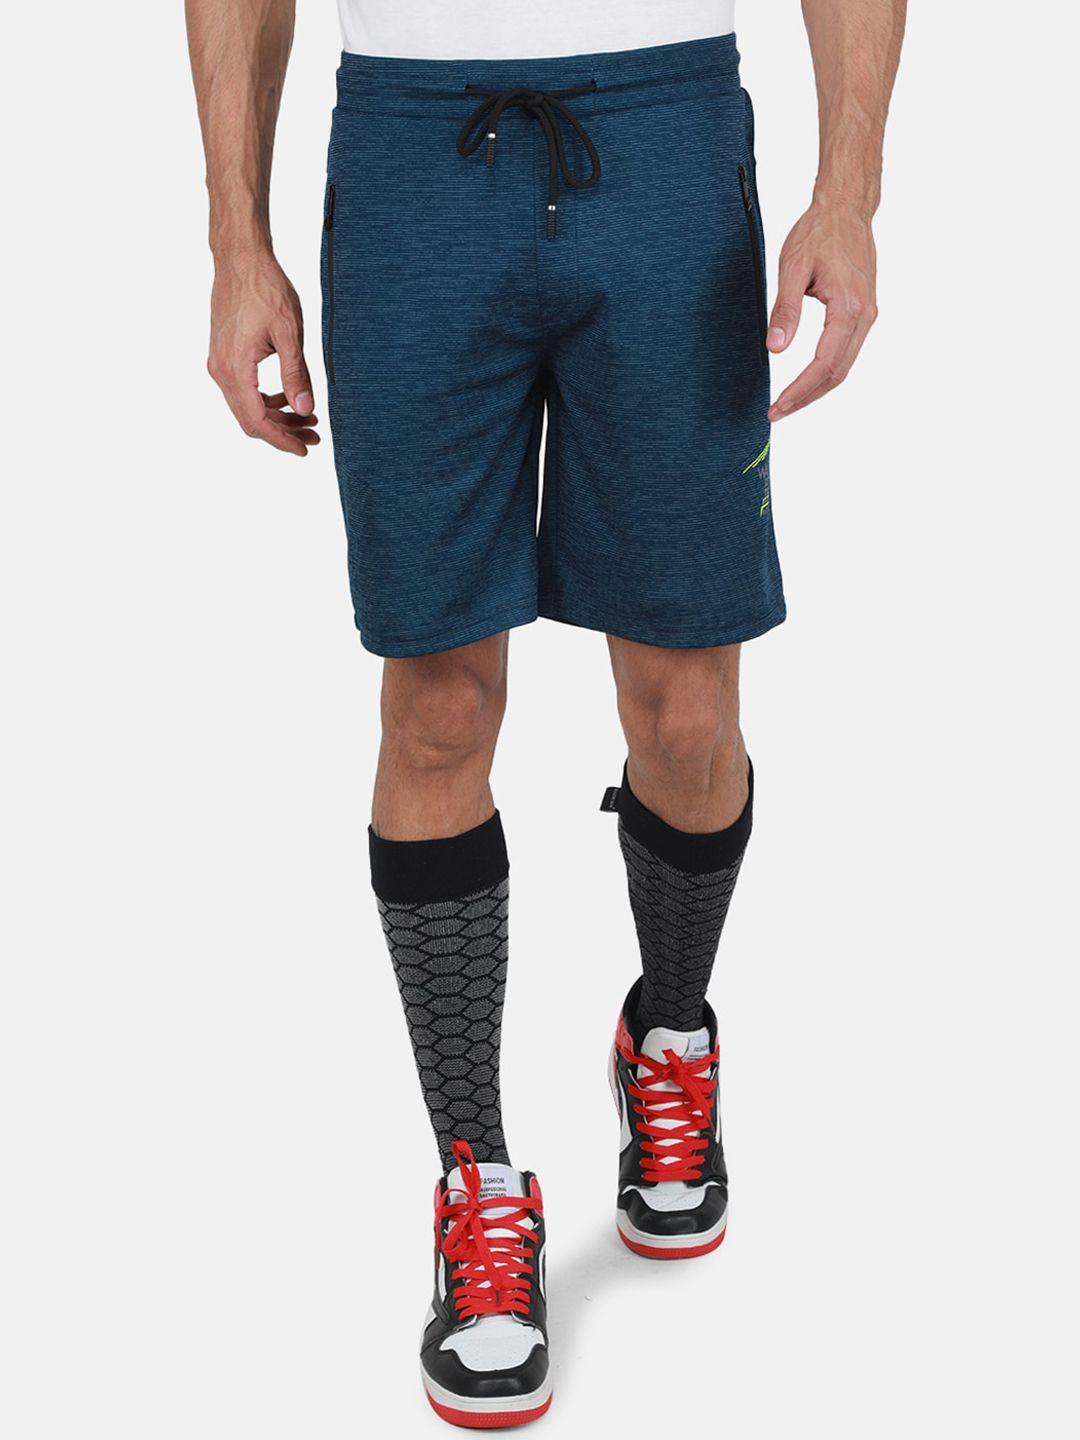 monte carlo men mid-rise regular shorts